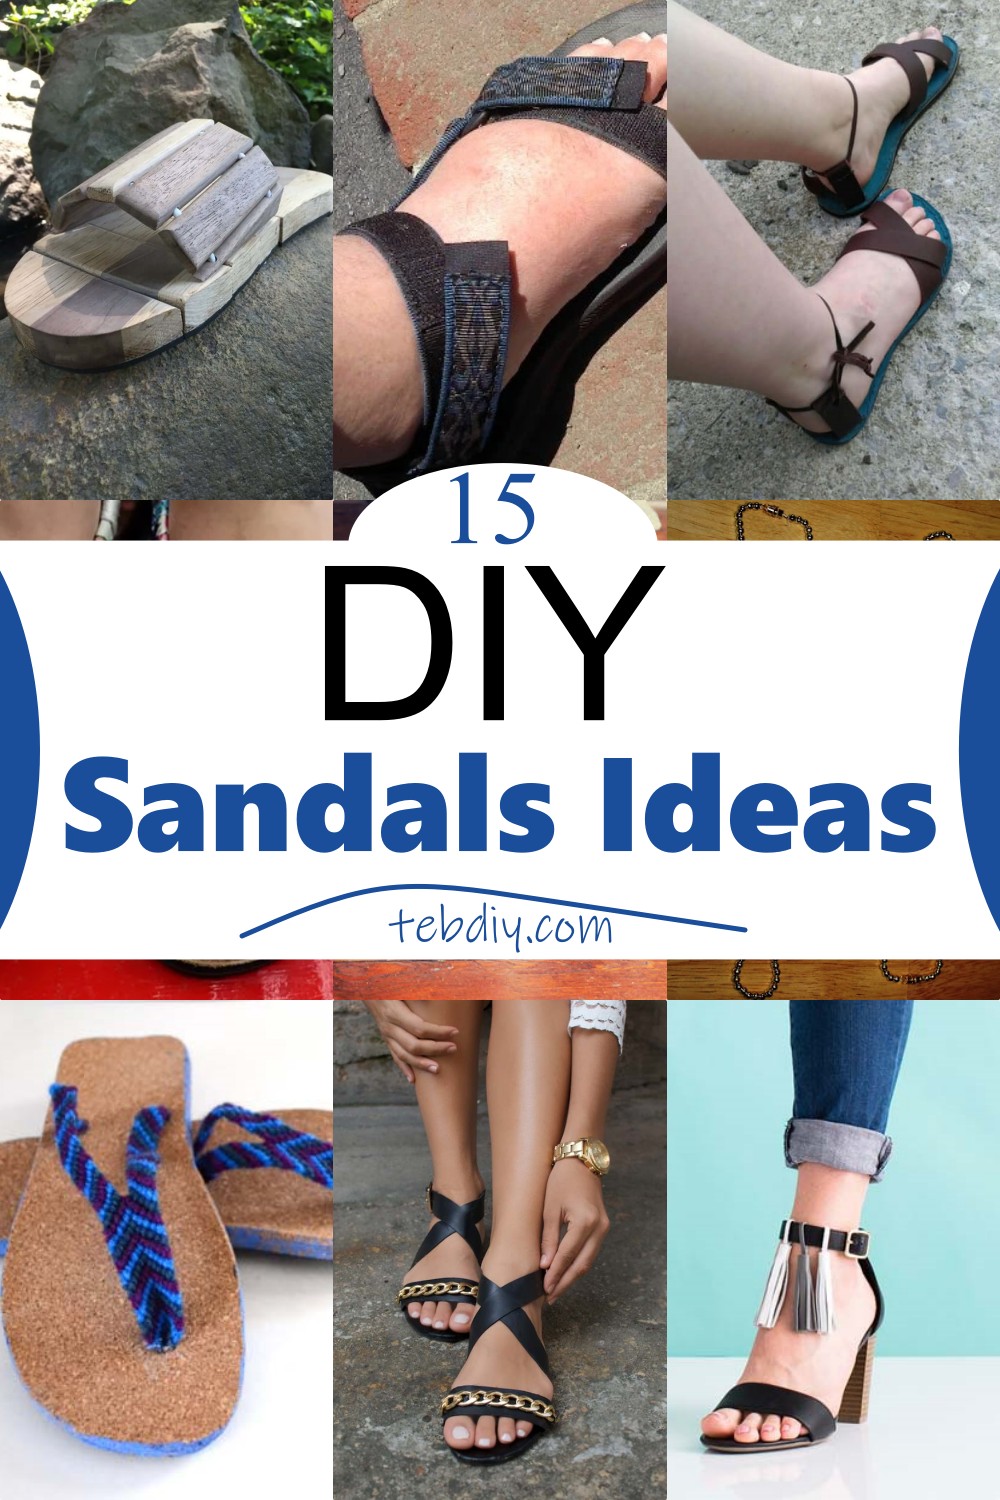 15 DIY Sandals Ideas